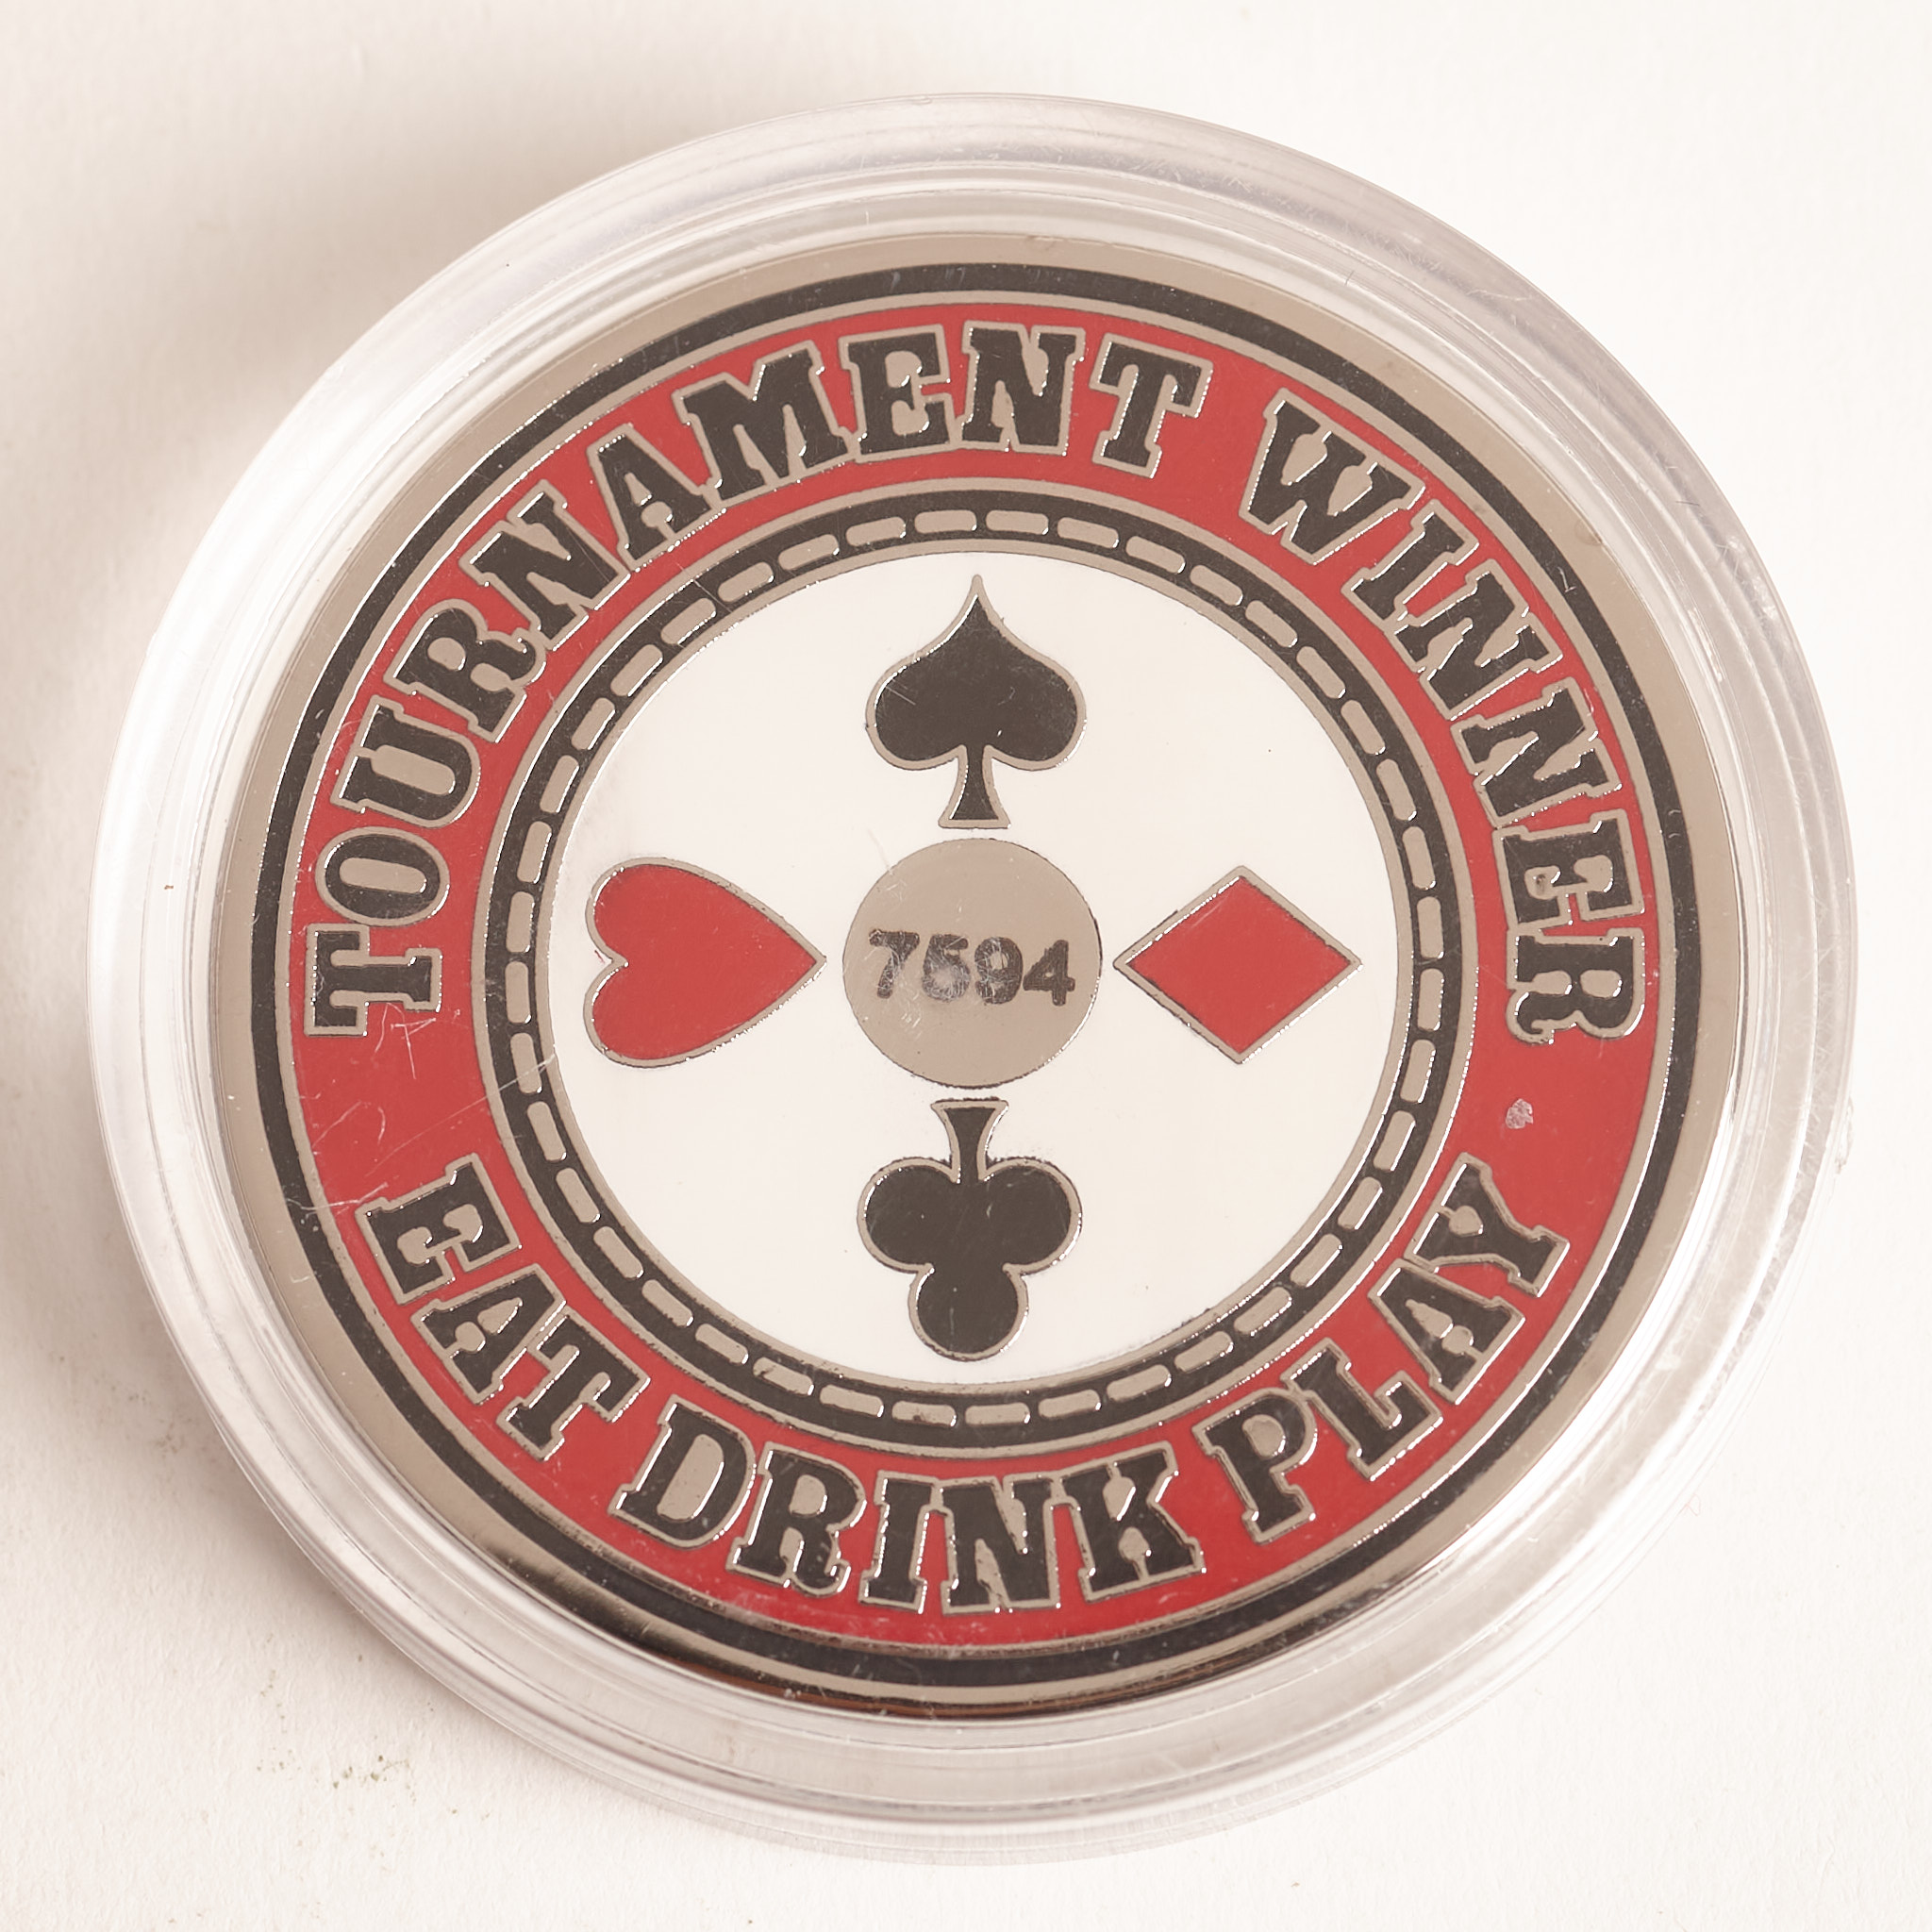 NPPL NATIONAL PUB POKER LEAGUE (No. 7594), TOURNAMENT WINNER, EAT DRINK PLAY, Poker Card Guard